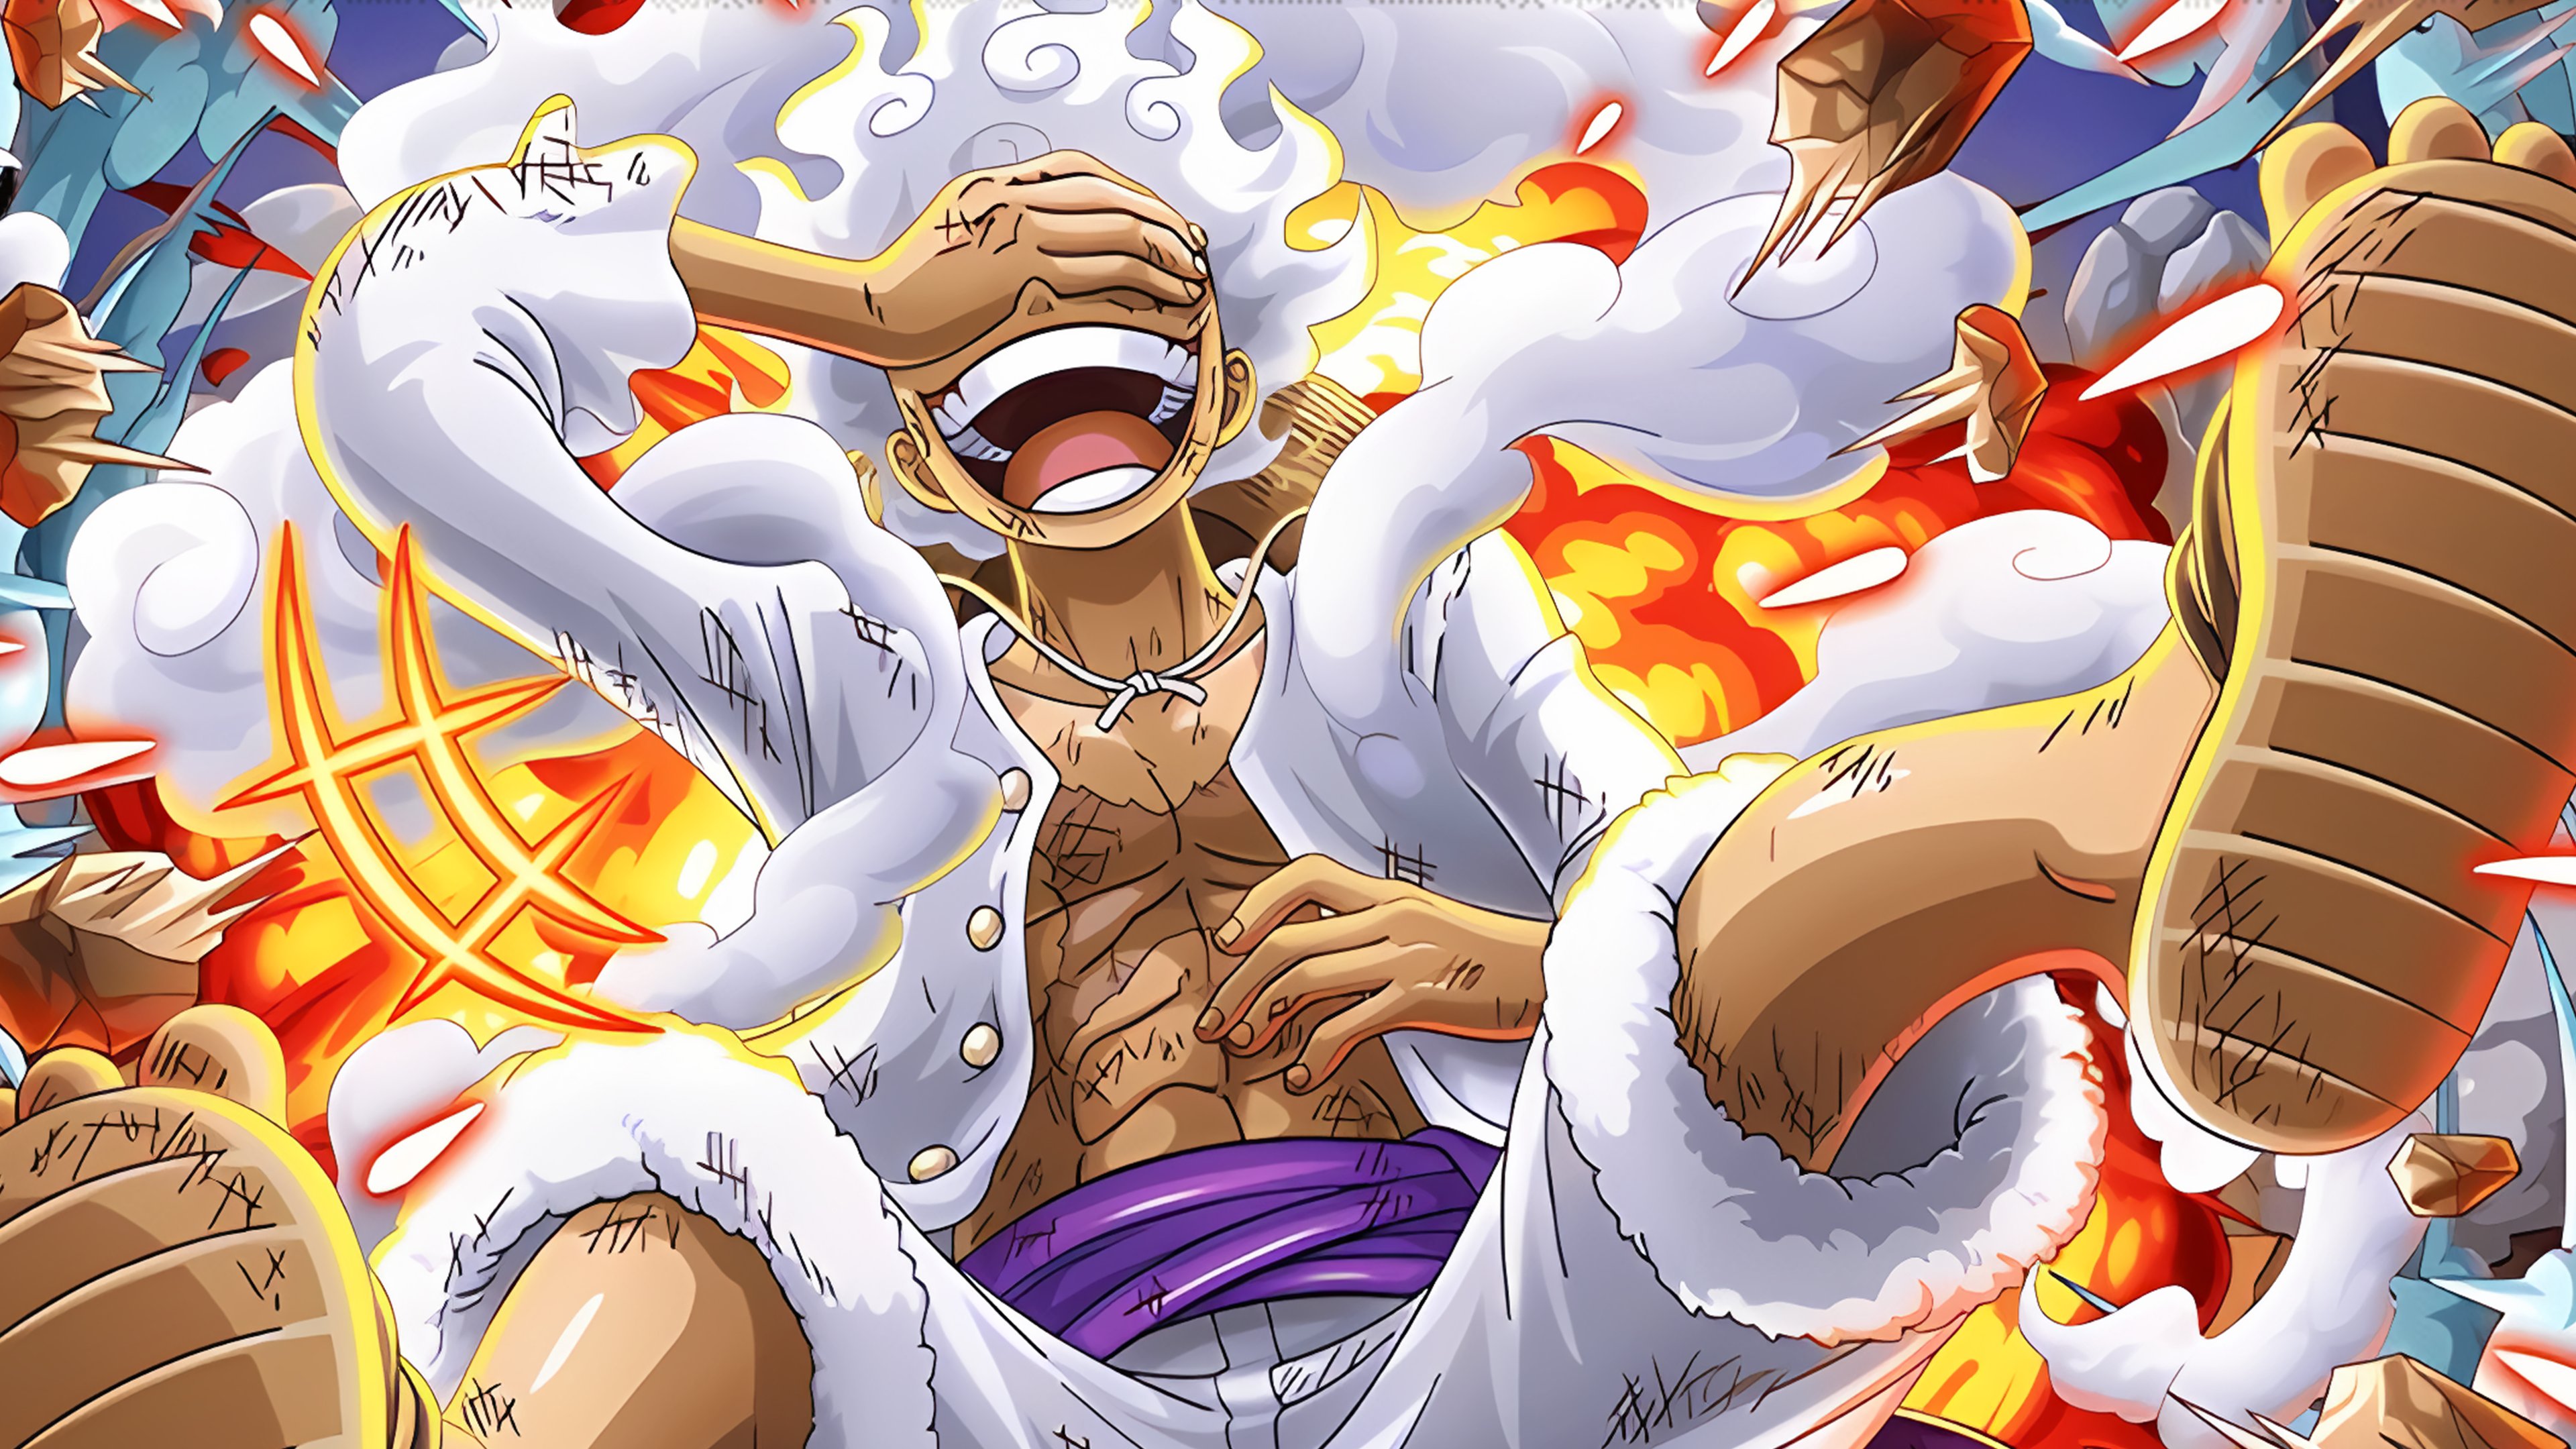 Hydros 5 in One Piece Treasure Cruise! [Mystical Figure in White] Monkey D. Luffy HD Art, 4K PC Wallpaper, 4K Phone Wallpaper! #OPTC #ONEPIECE